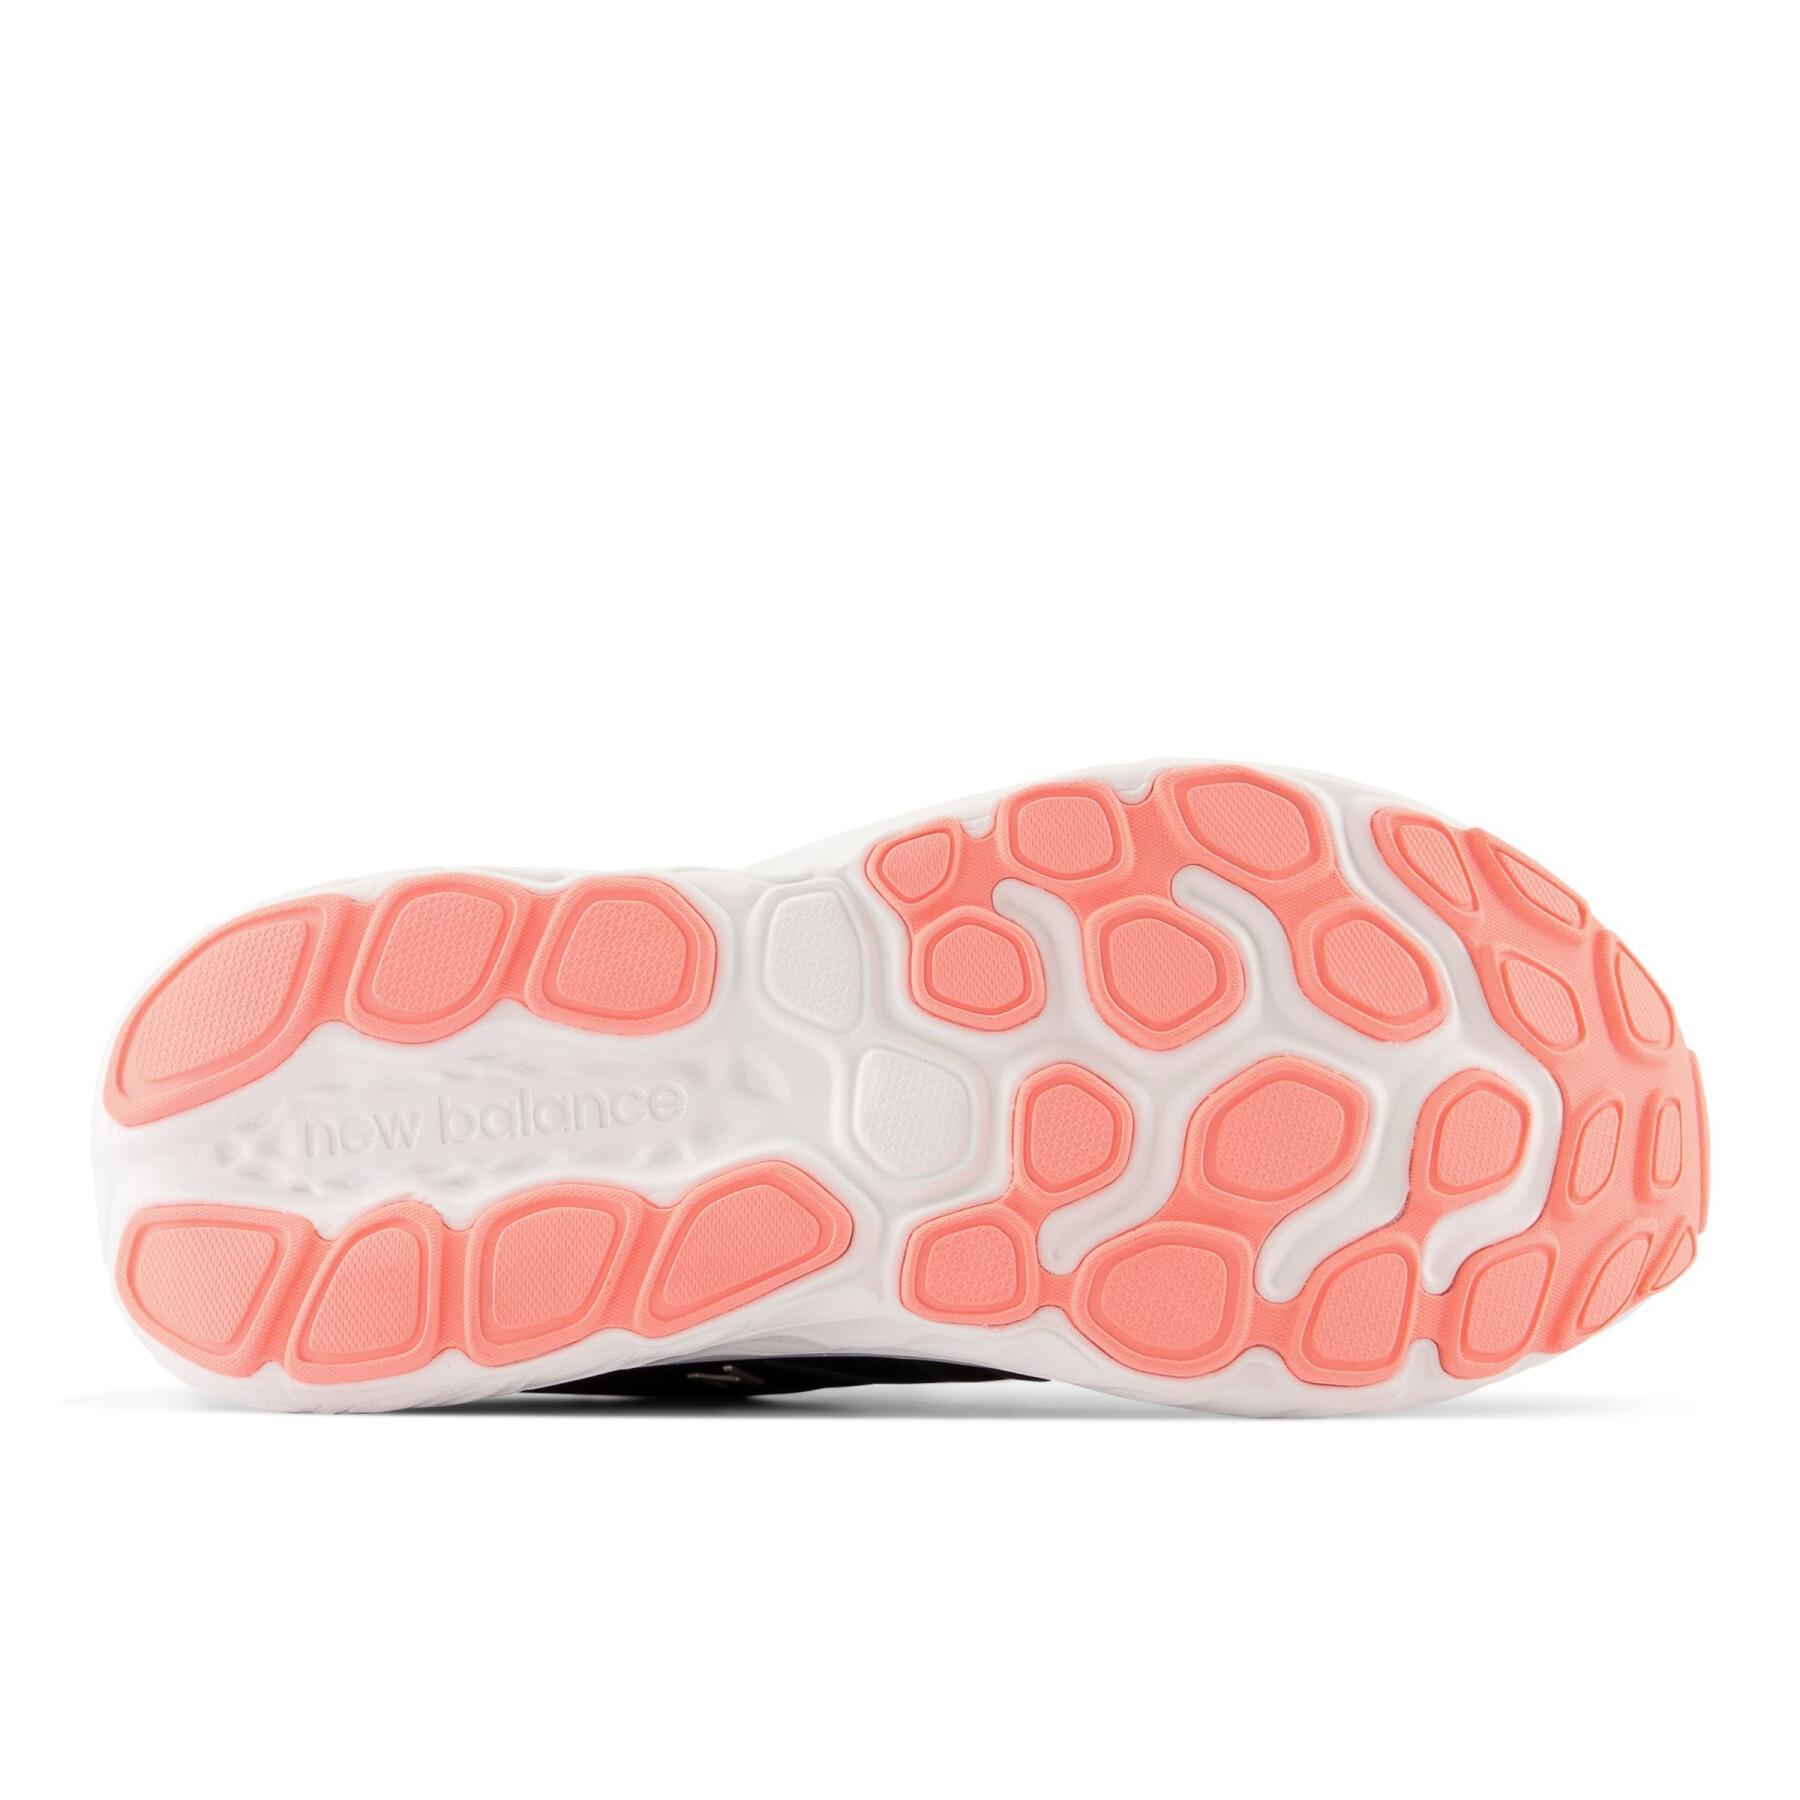 Zapatillas de running para mujer New Balance Fresh Foam Evoz v3